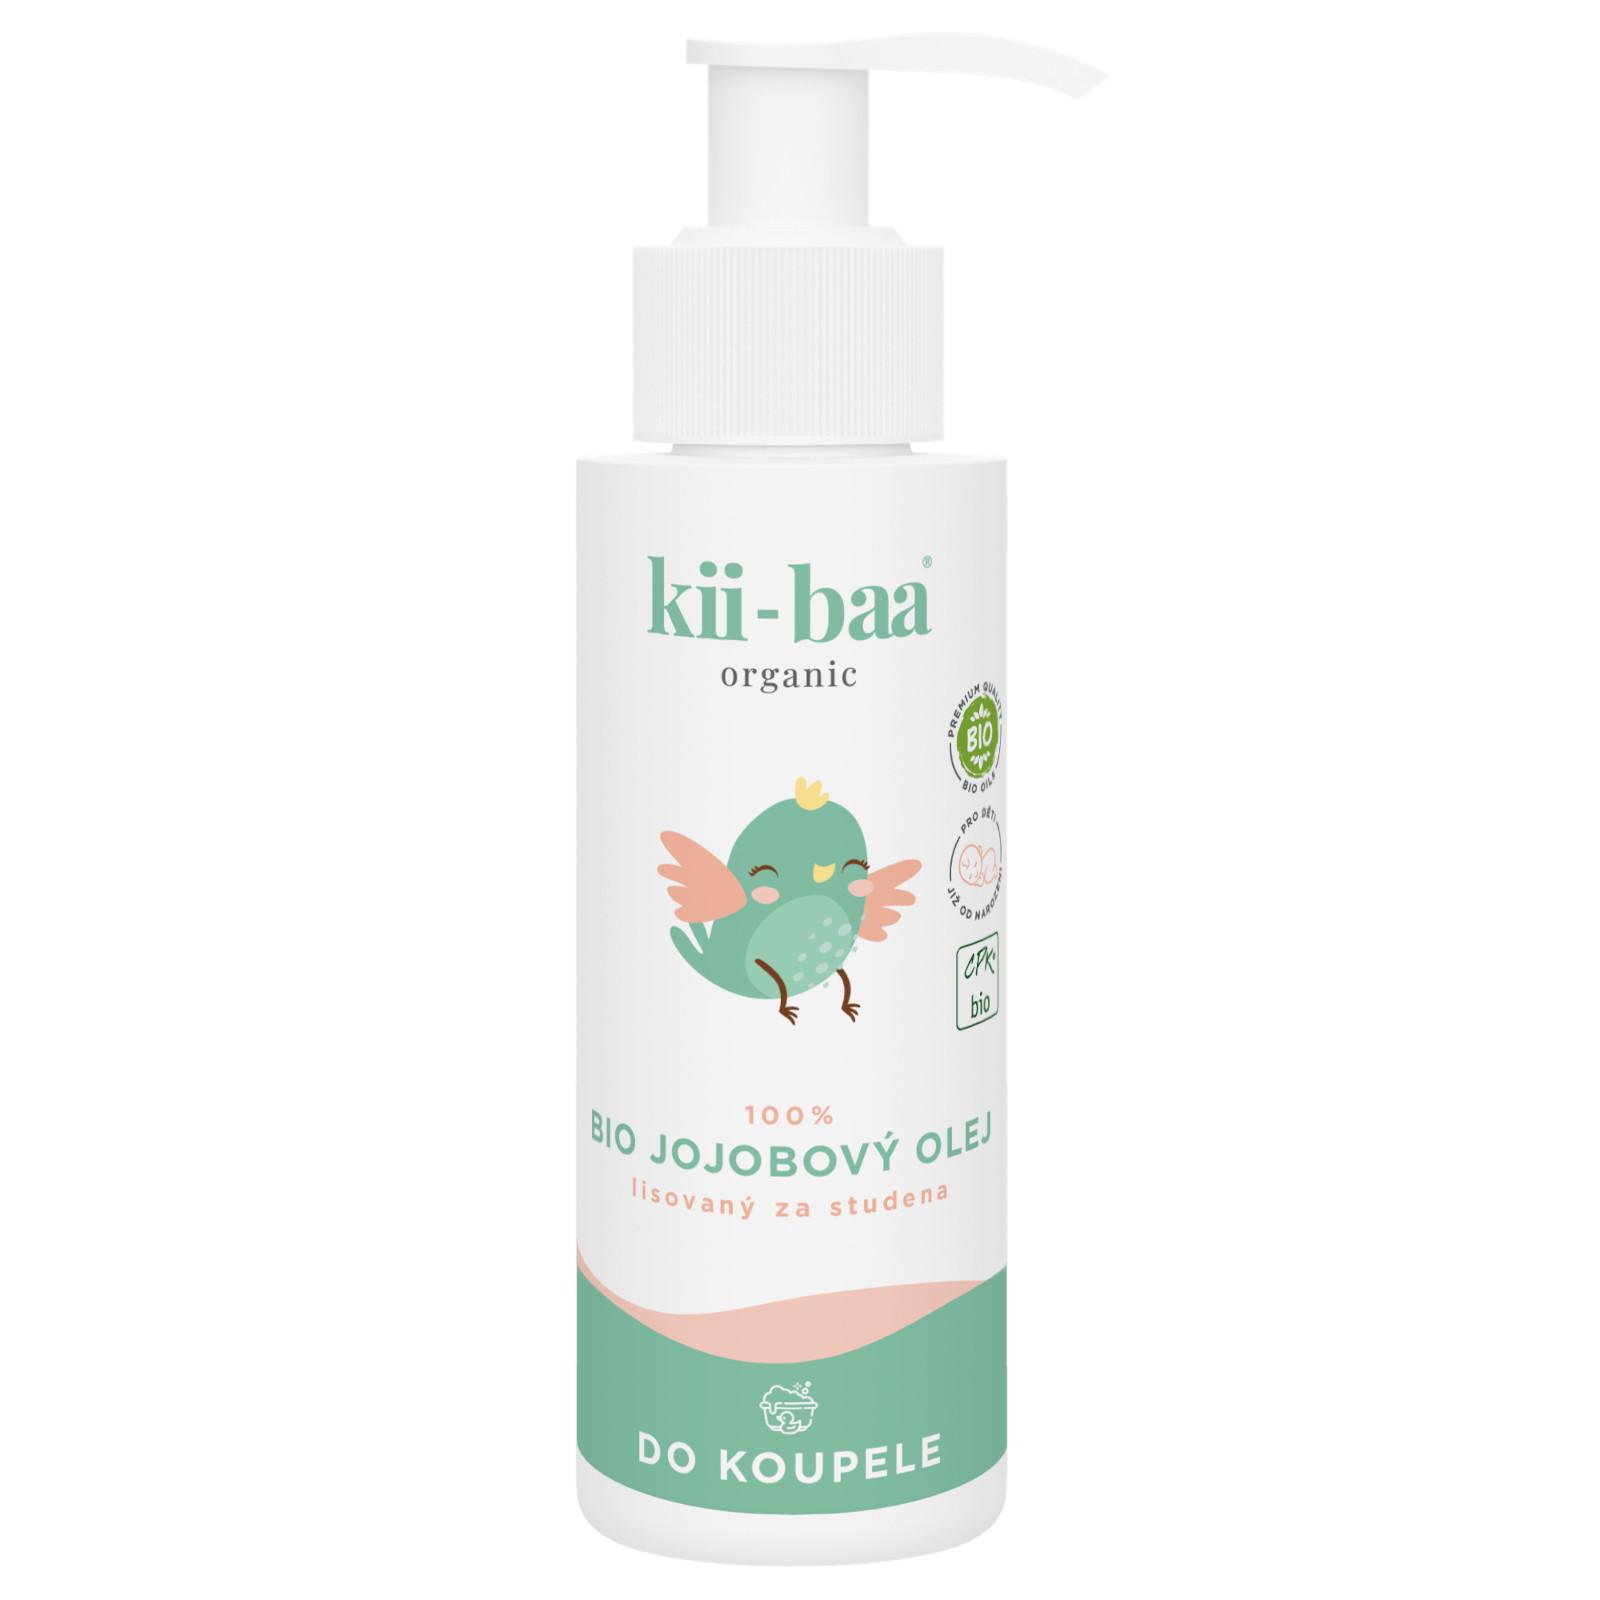 kii-baa® organic 100% Jojobový Bio olej 100ml 0+ Do koupele 100ml